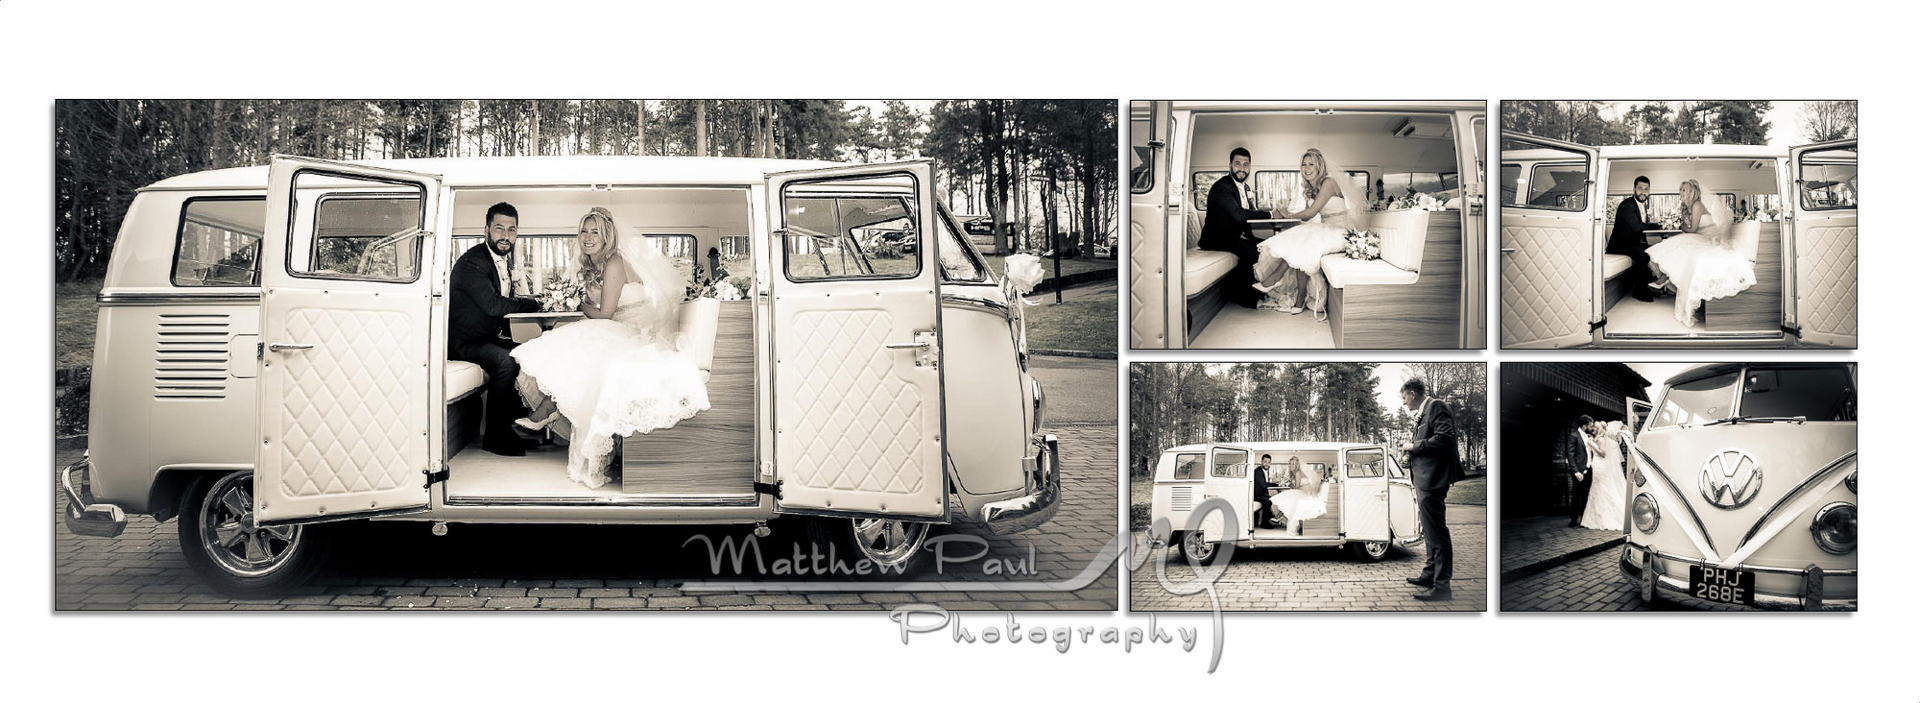 VW camper van for wedding, Westerham Golf Club